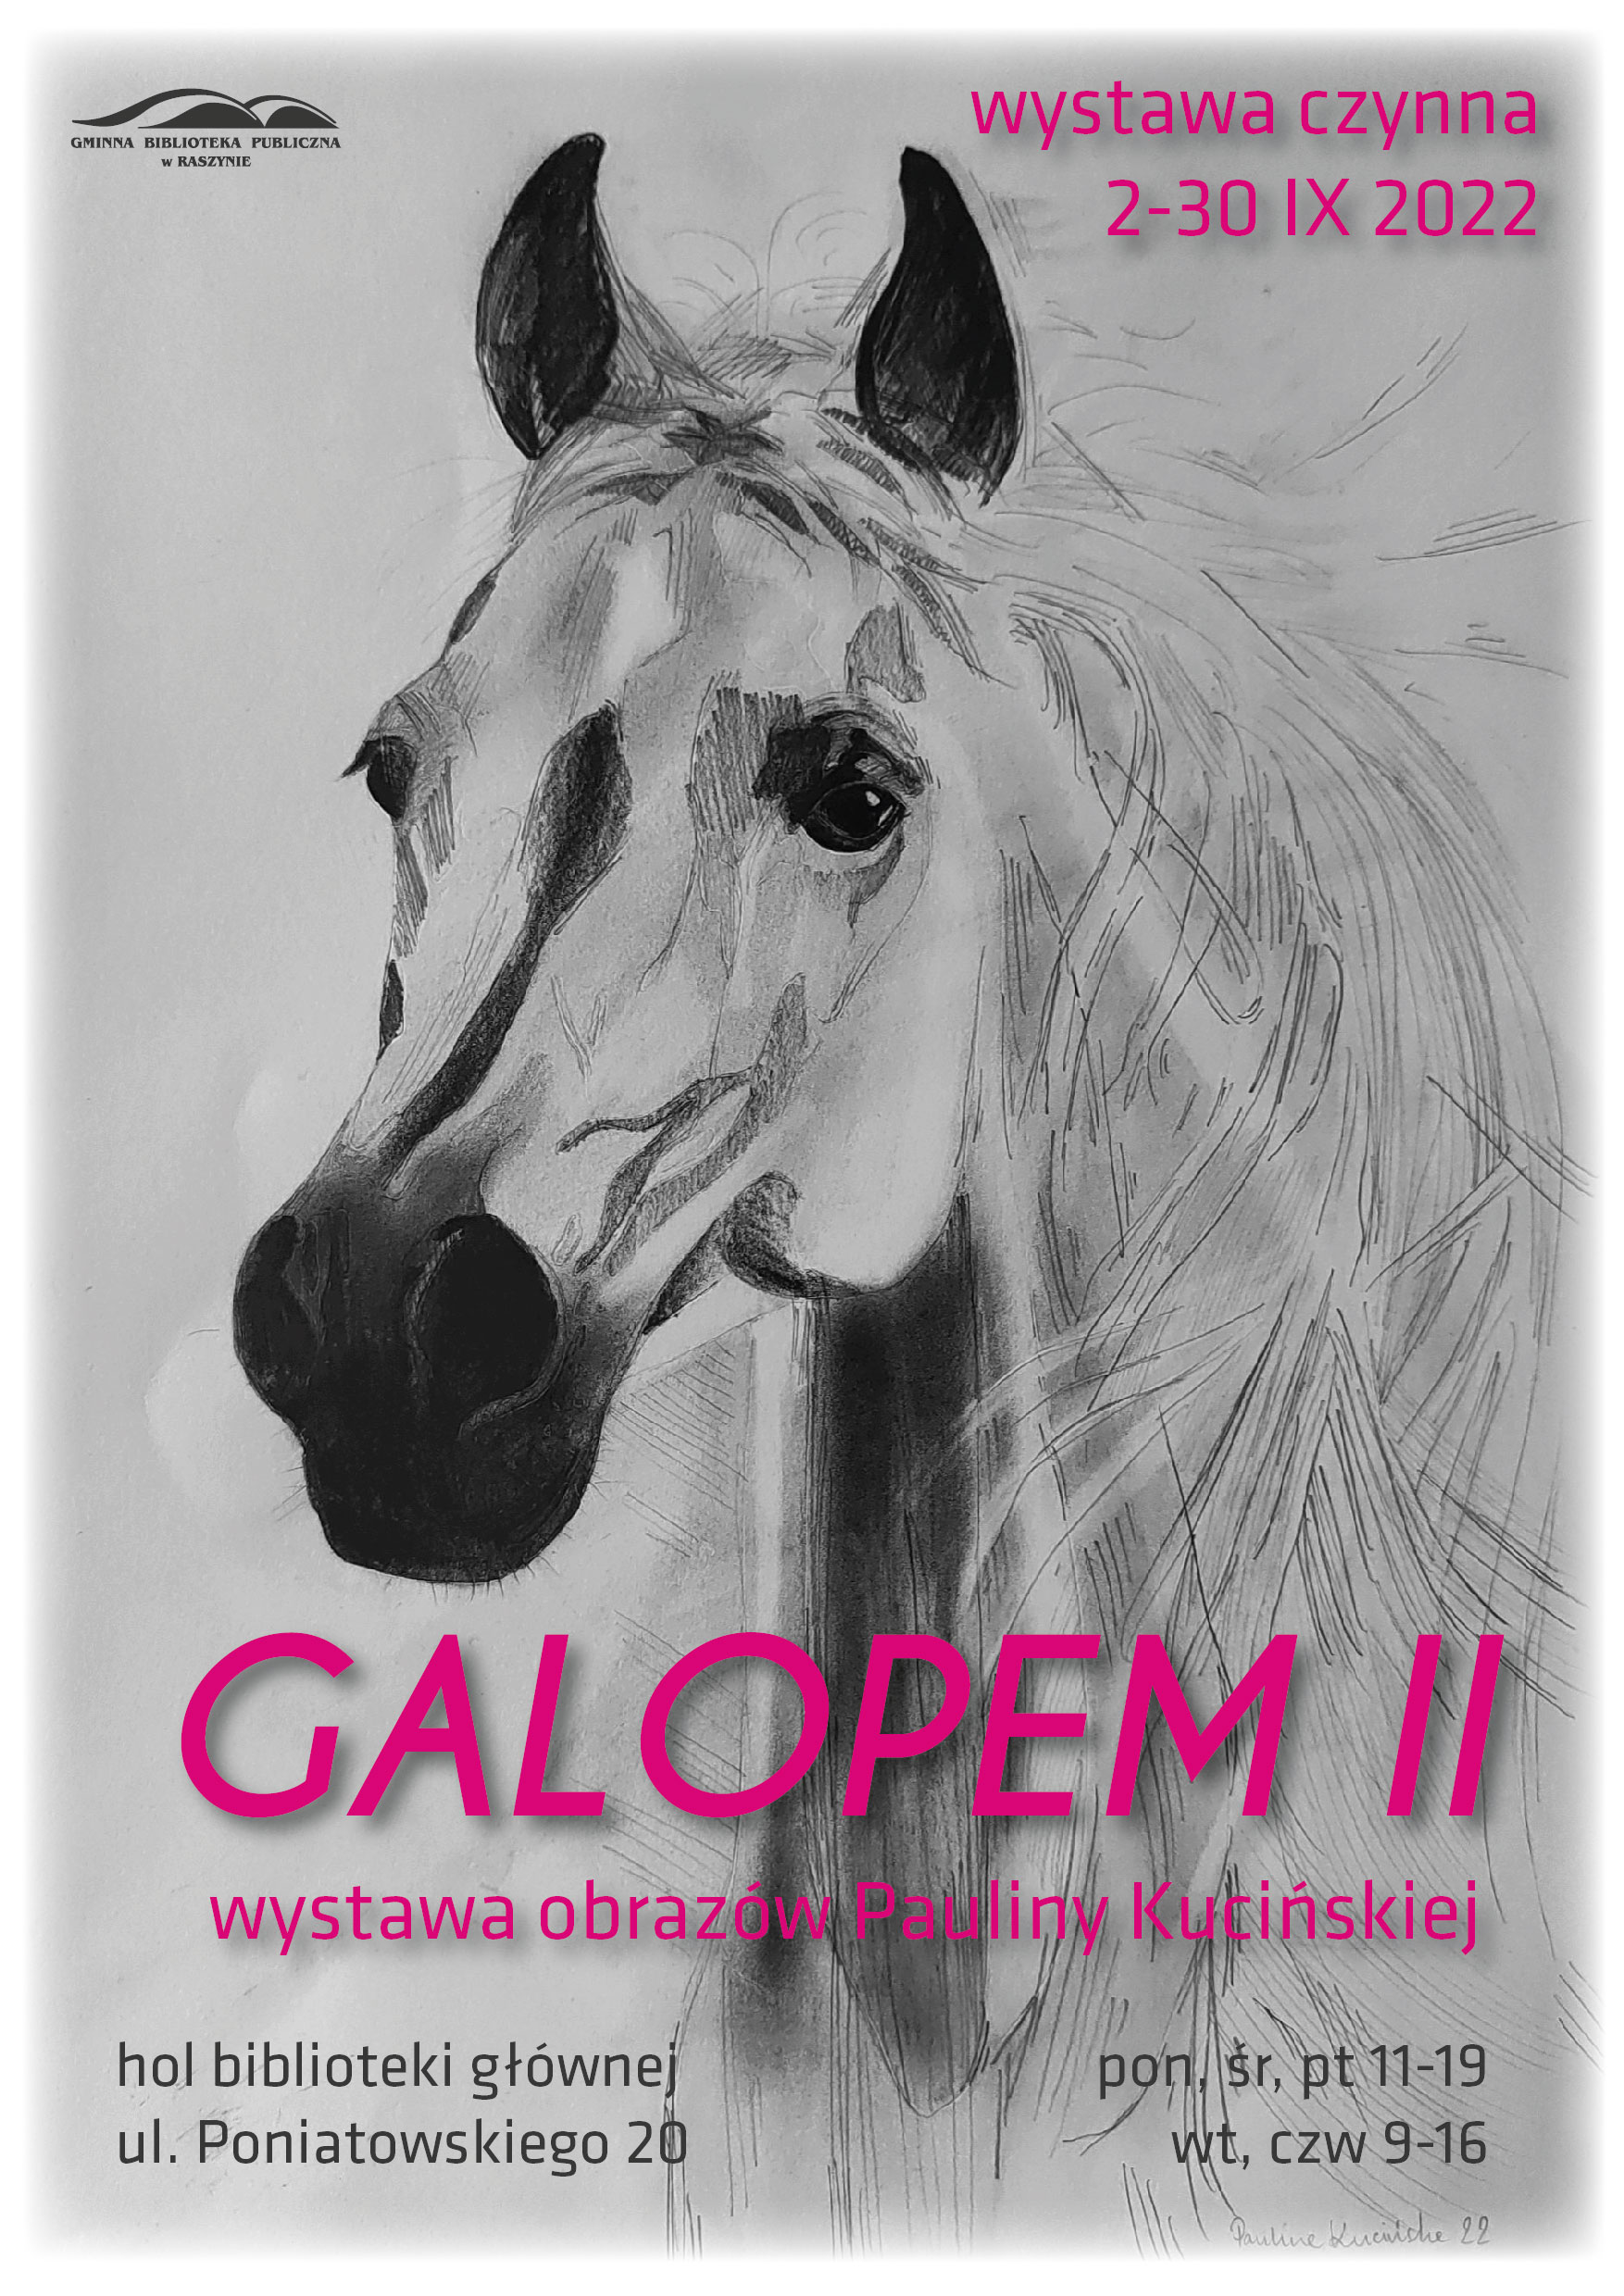 Wystawa "Galopem II" - Paulina Kucińska